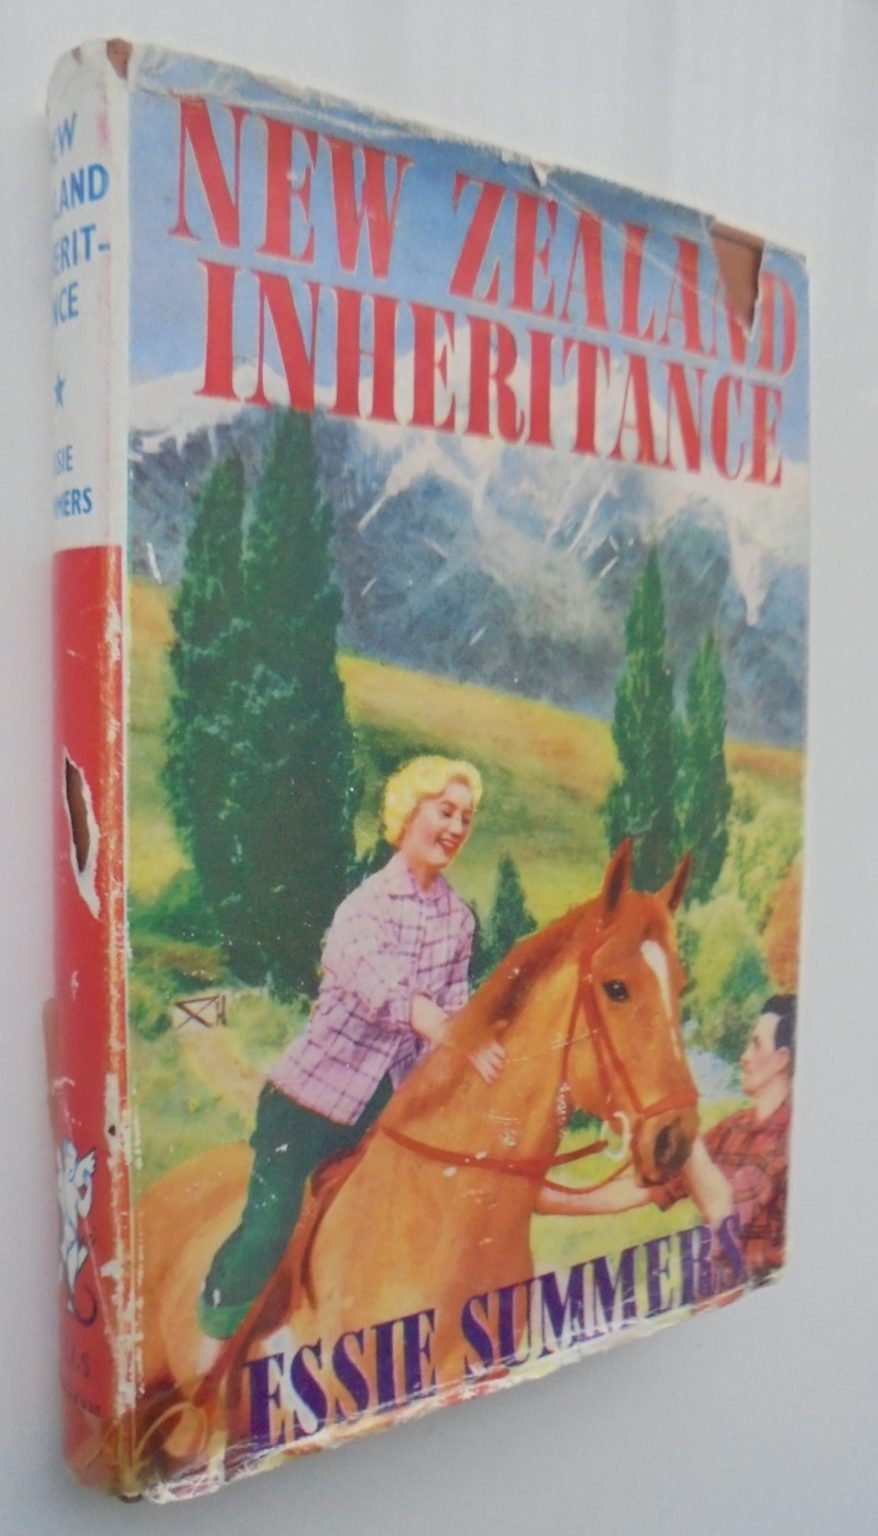 New Zealand Inheritance. First Edition 1957 By Essie Summers. SCARCE.